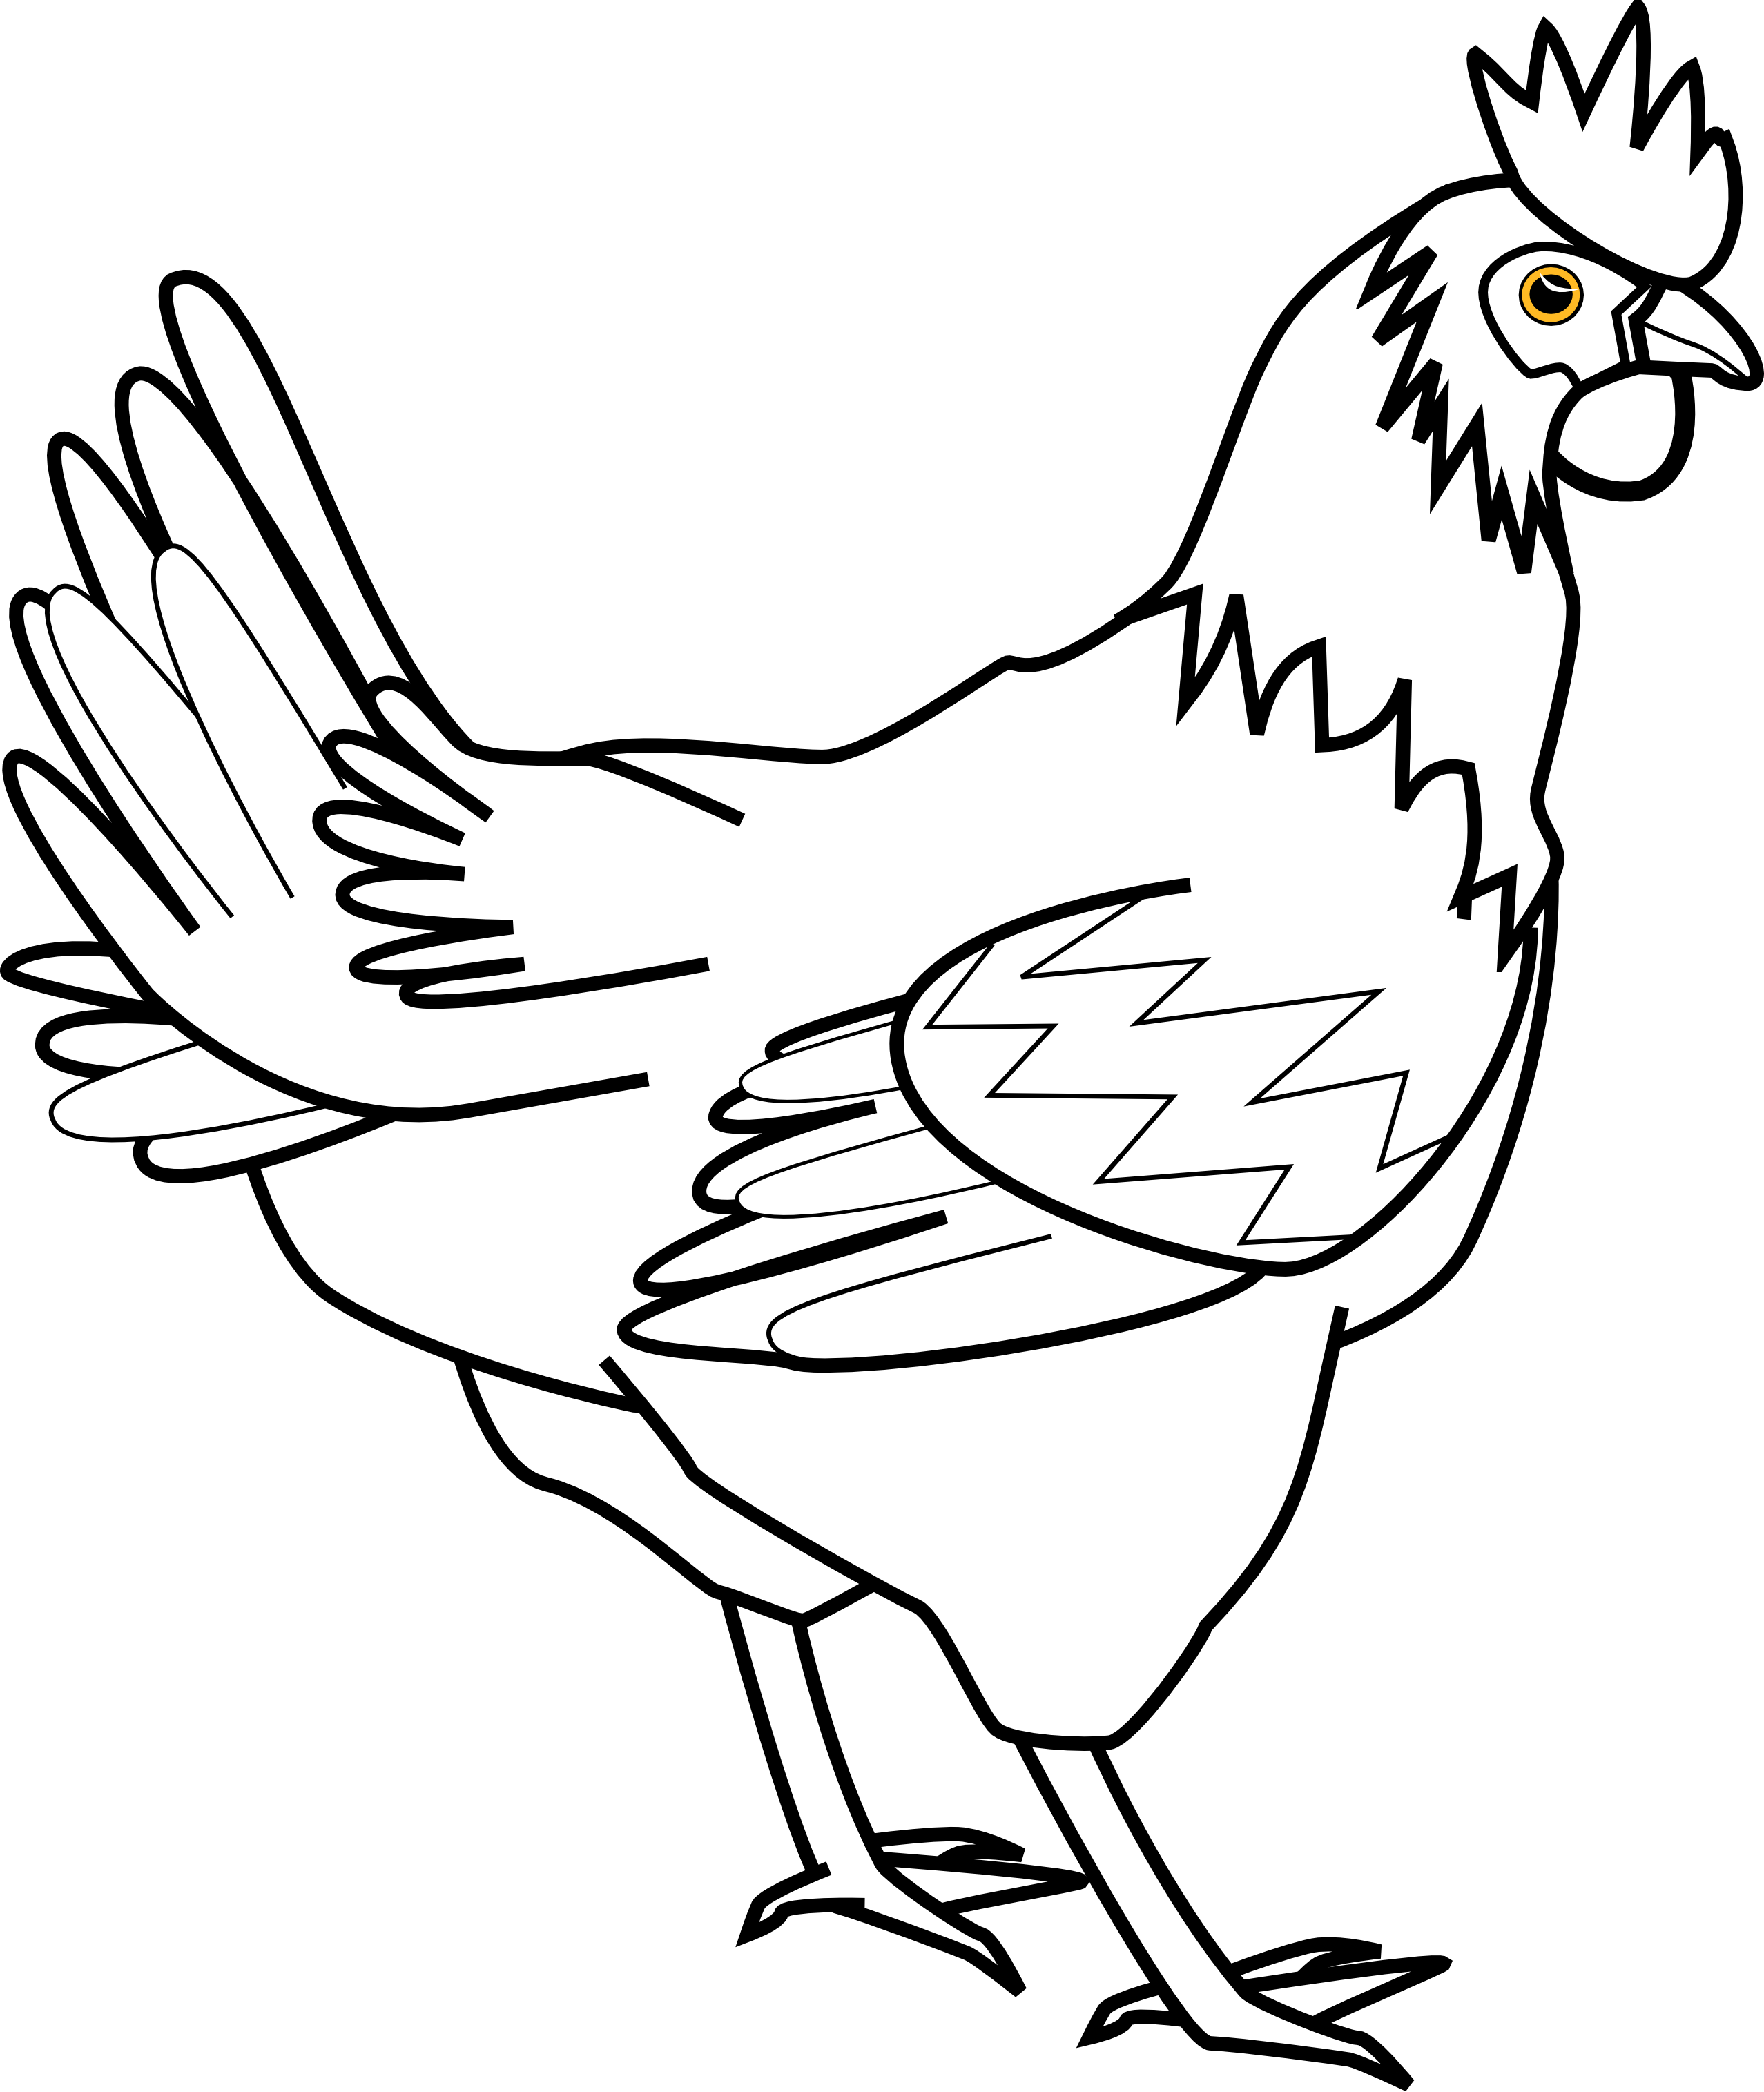 Chicken clip art black and white